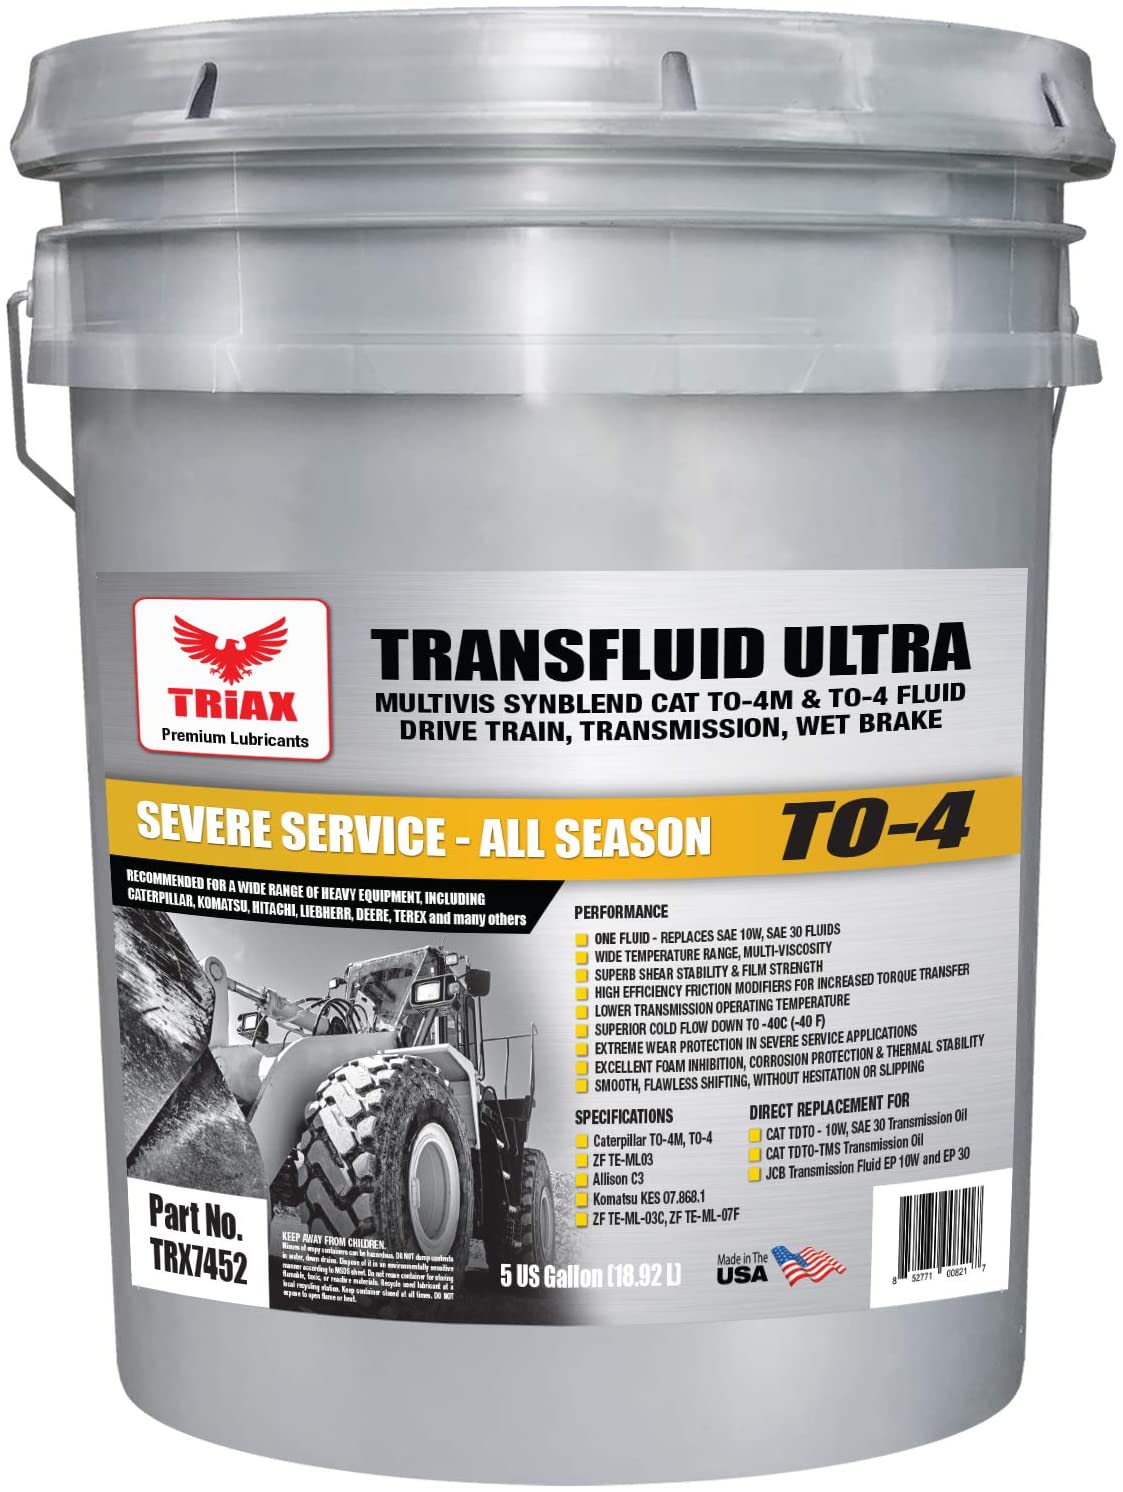 Triax TRANSFLUID Ultra to-4 - Multi-Viscosity Powershift Transmission TO-4M Drive Train and Heavy Duty Transmission Fluid (5 GAL Pail) (5 GAL PAIL)